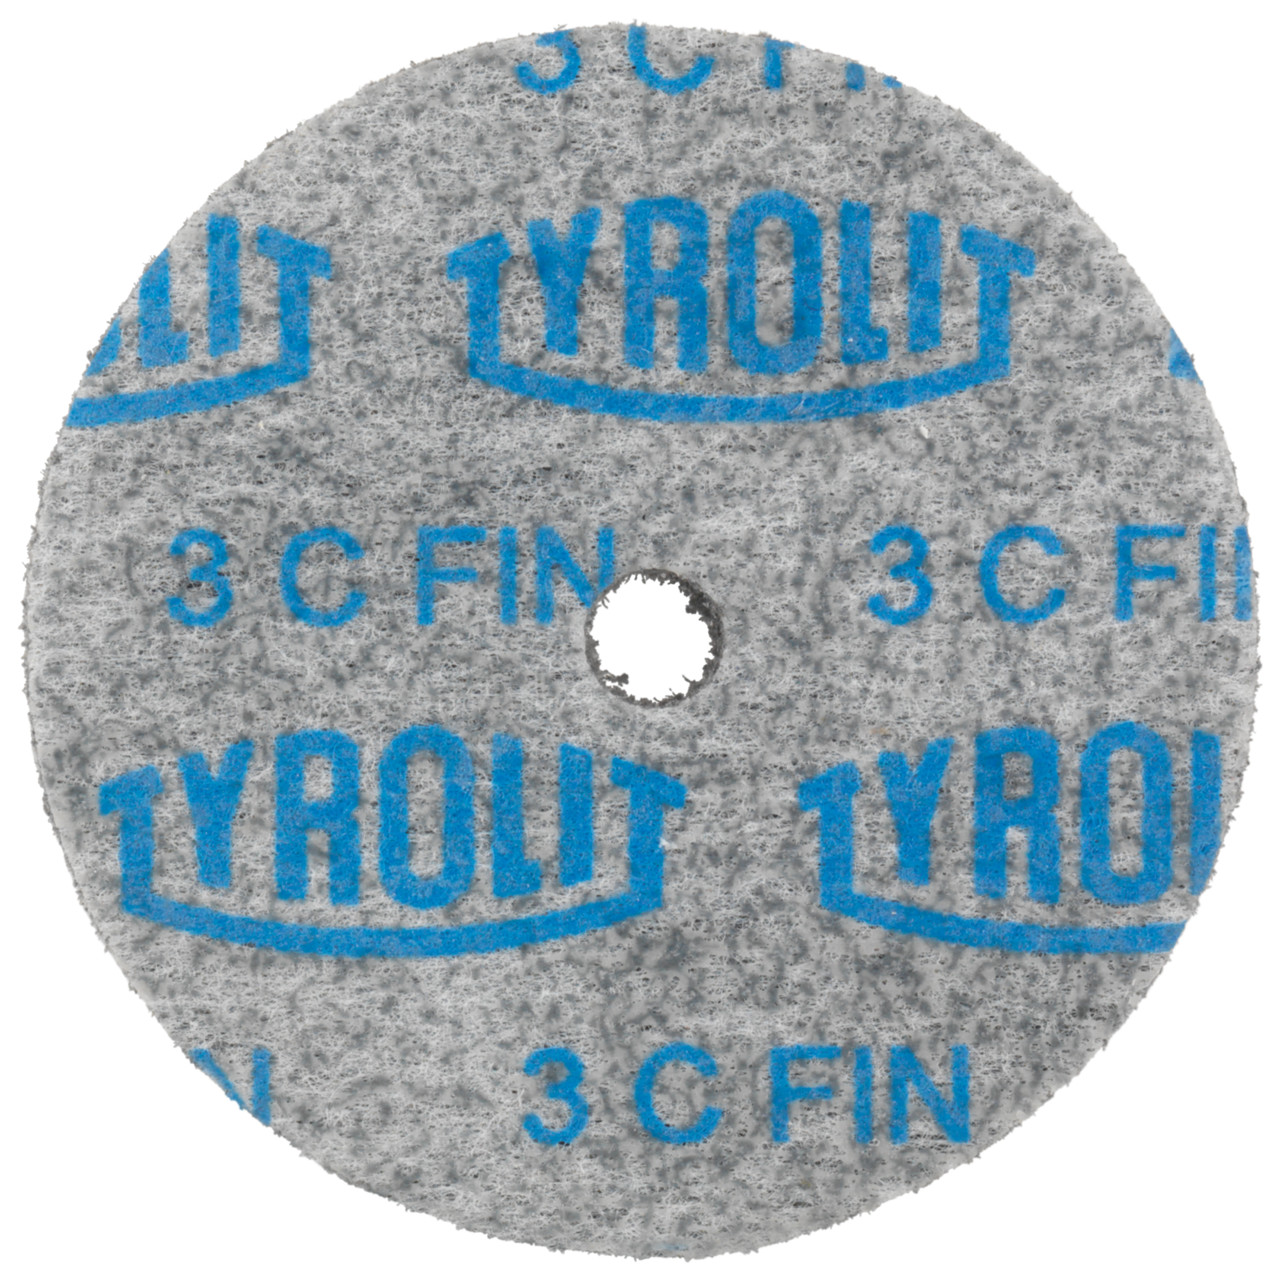 Tyrolit Discos compactos prensados DxDxH 25x25x4,8 Inserto universal, 2 A MEDIO, forma: 1, Art. 34201993